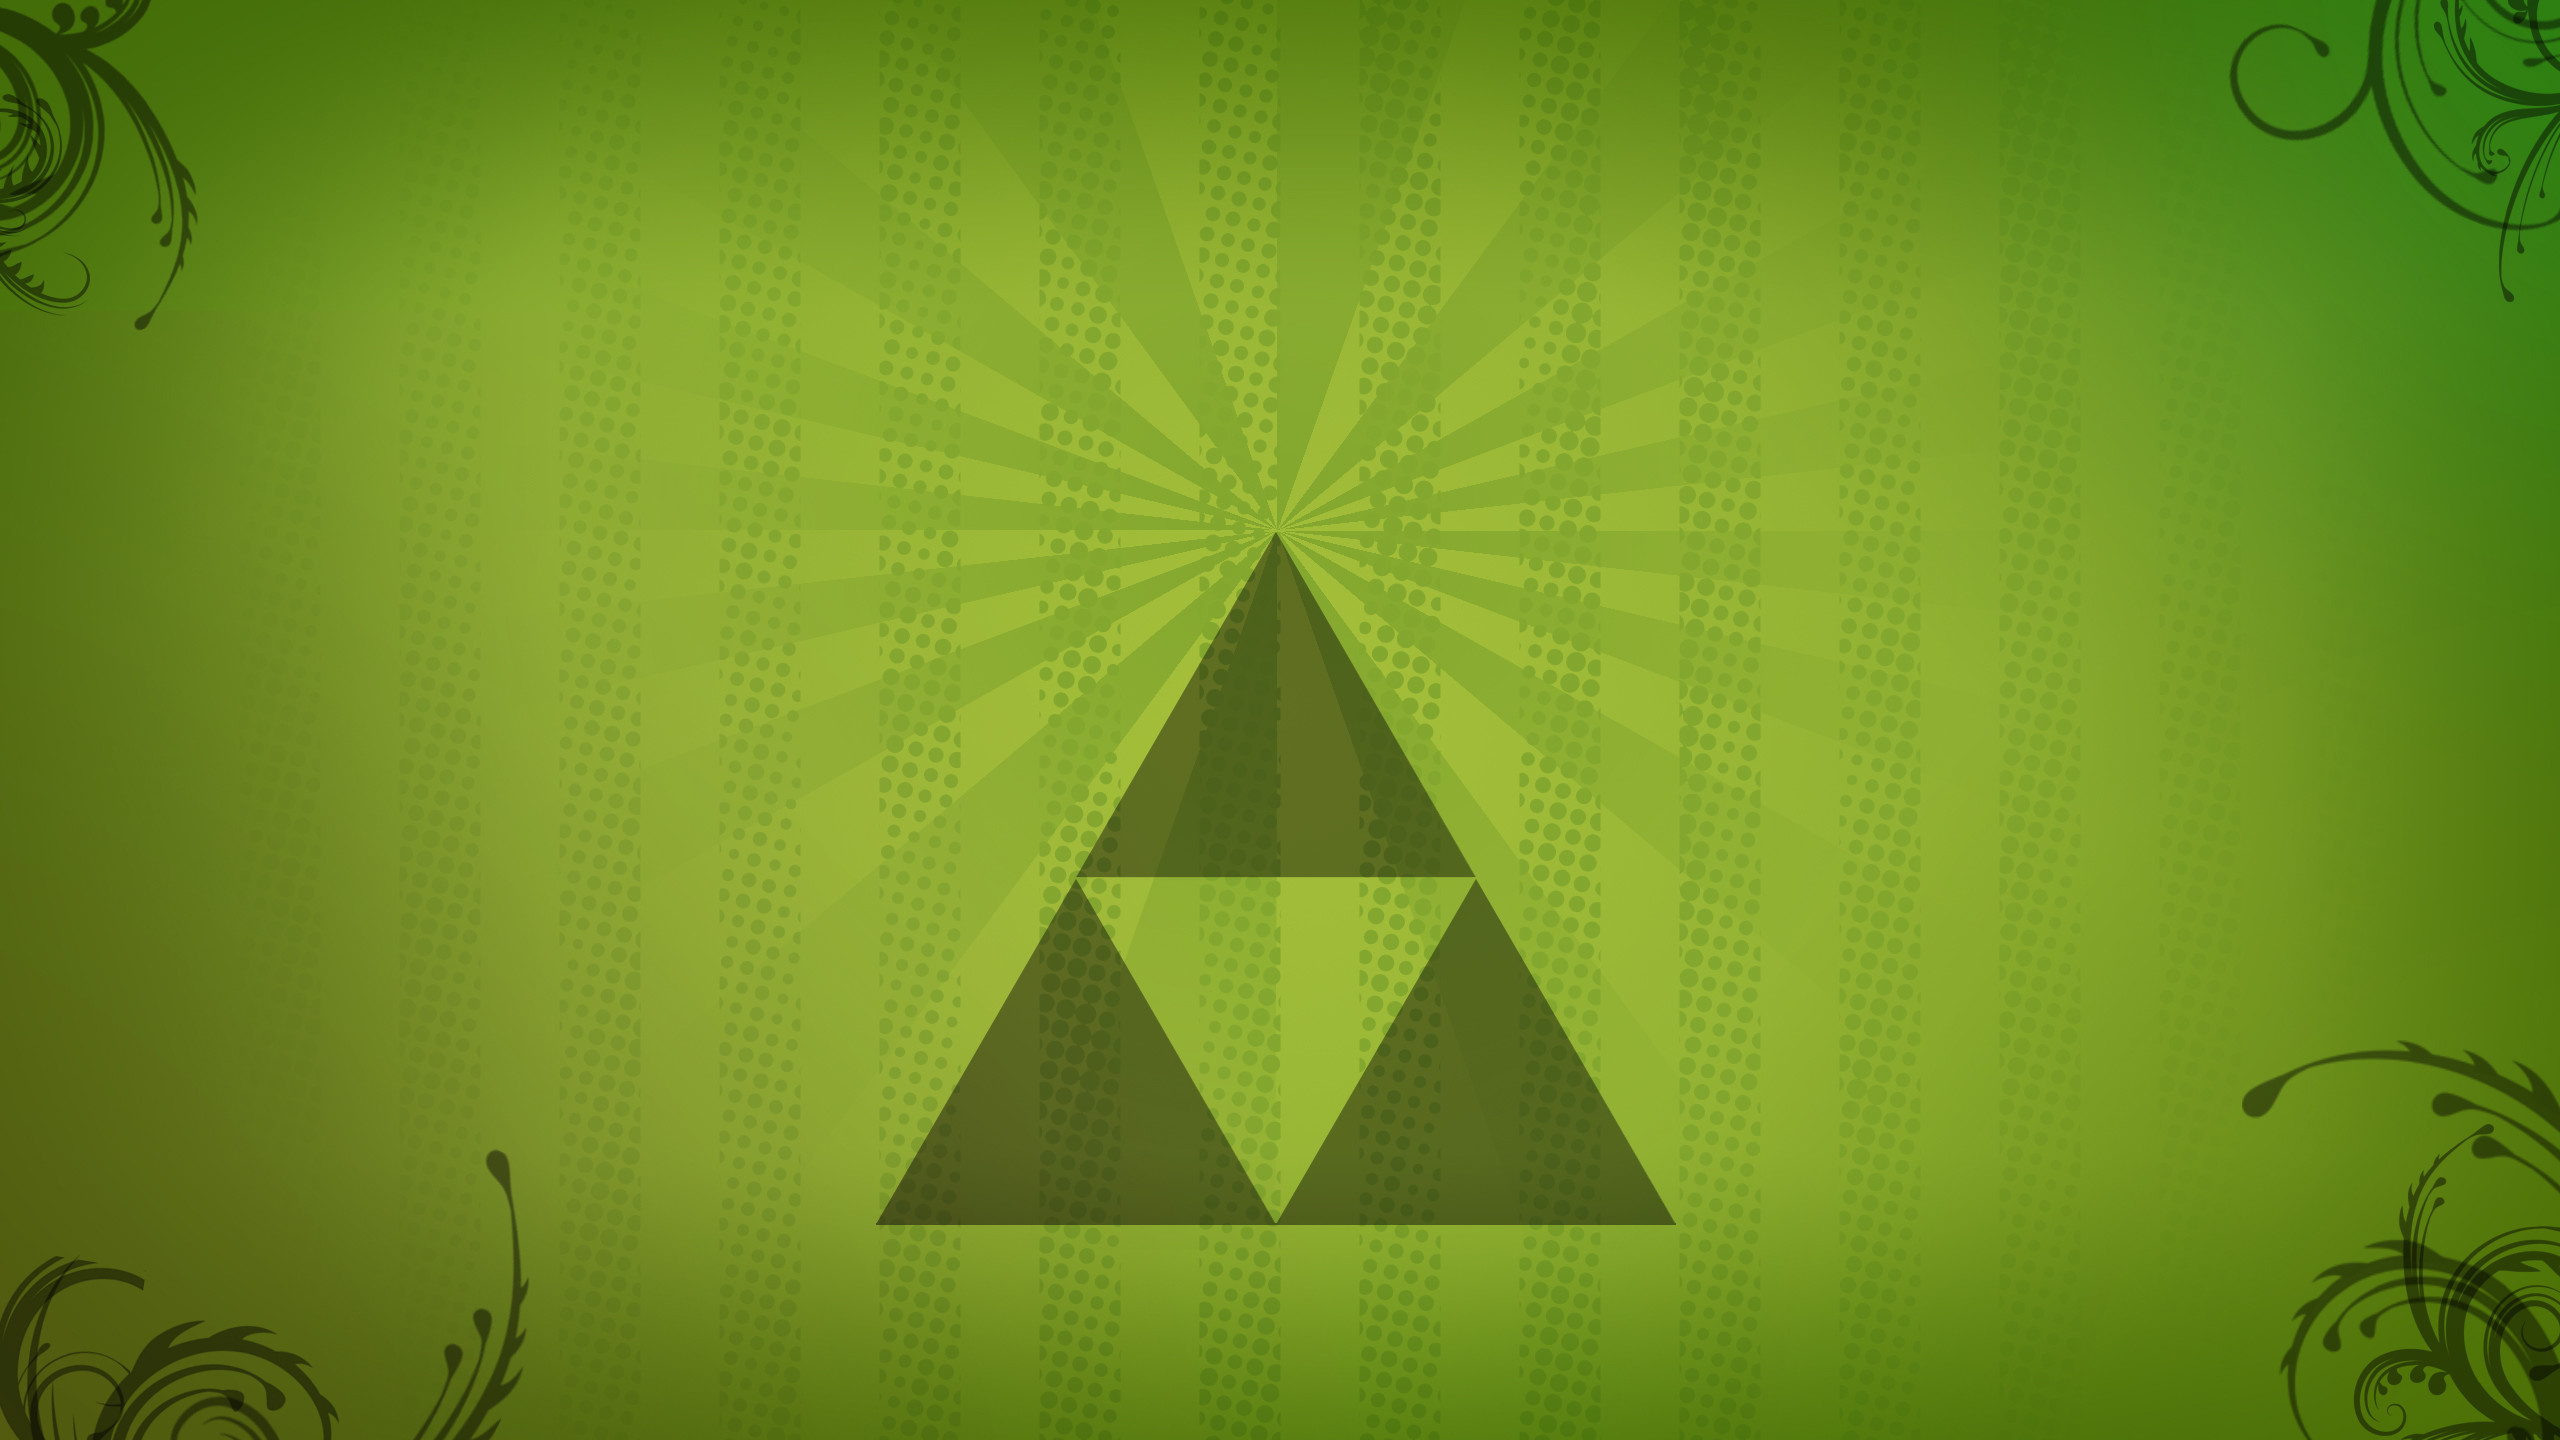 2560x1440 ... Zelda Triforce wallpaper - minimalistic by H-Thomson